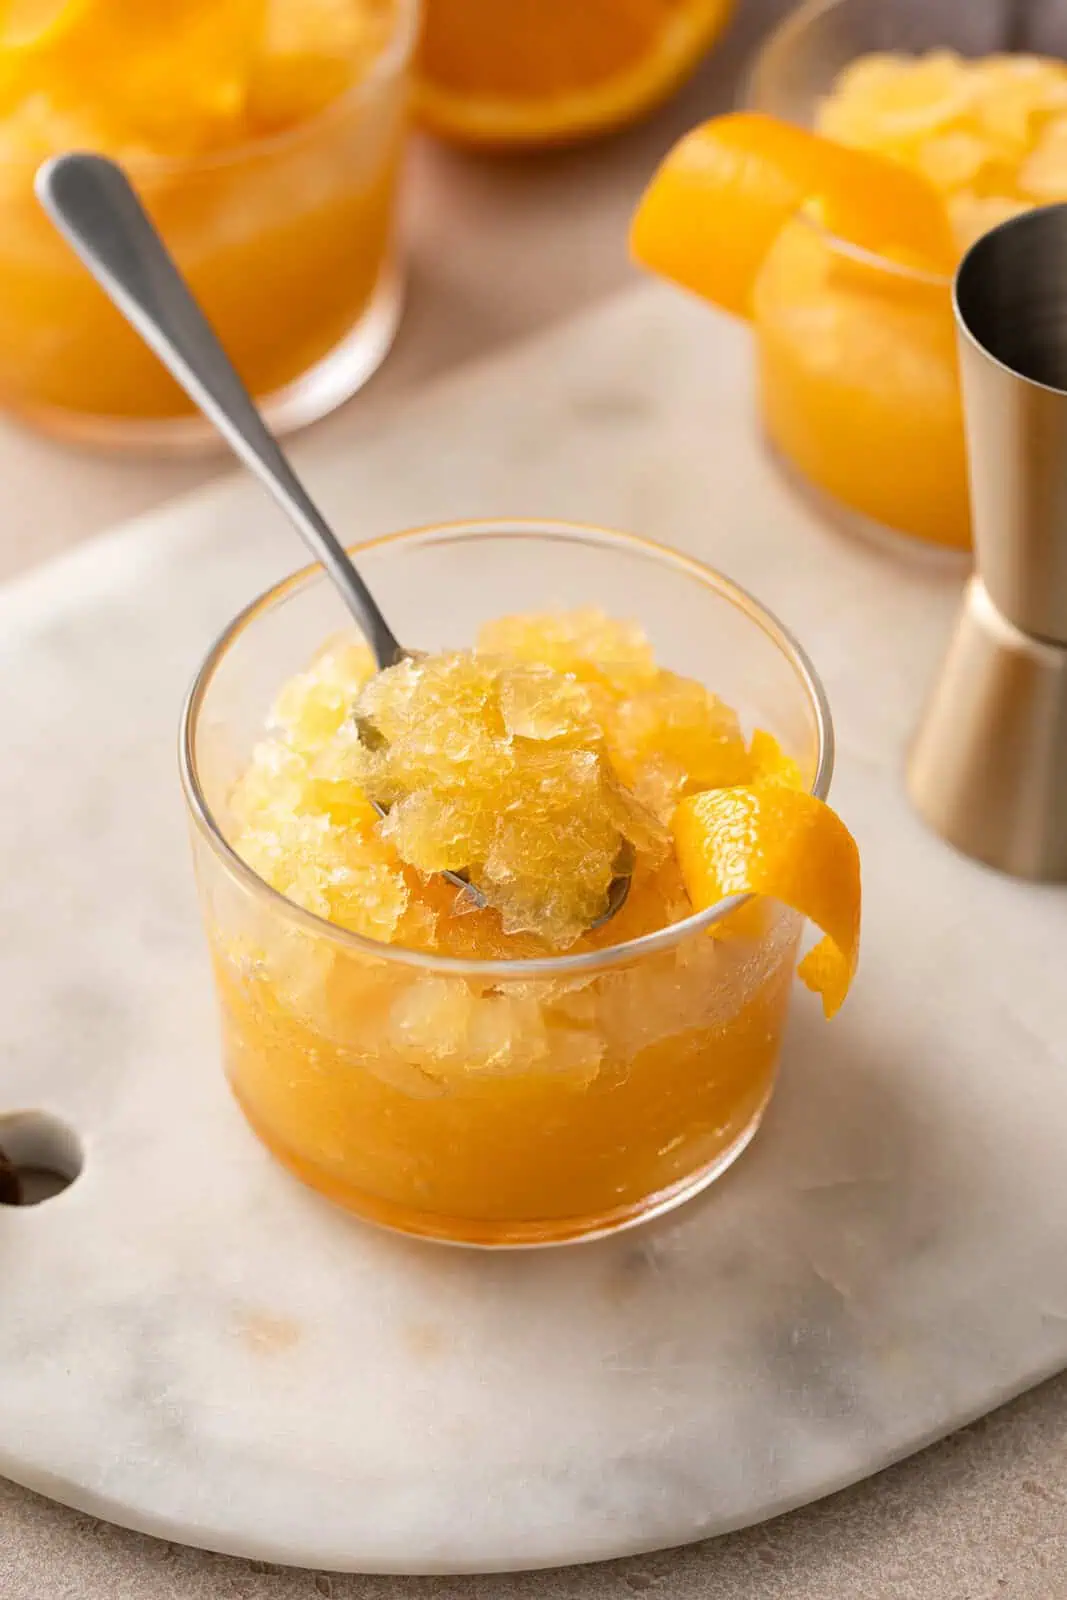 Spoon in a glass of bourbon slush garnished with an orange twist.